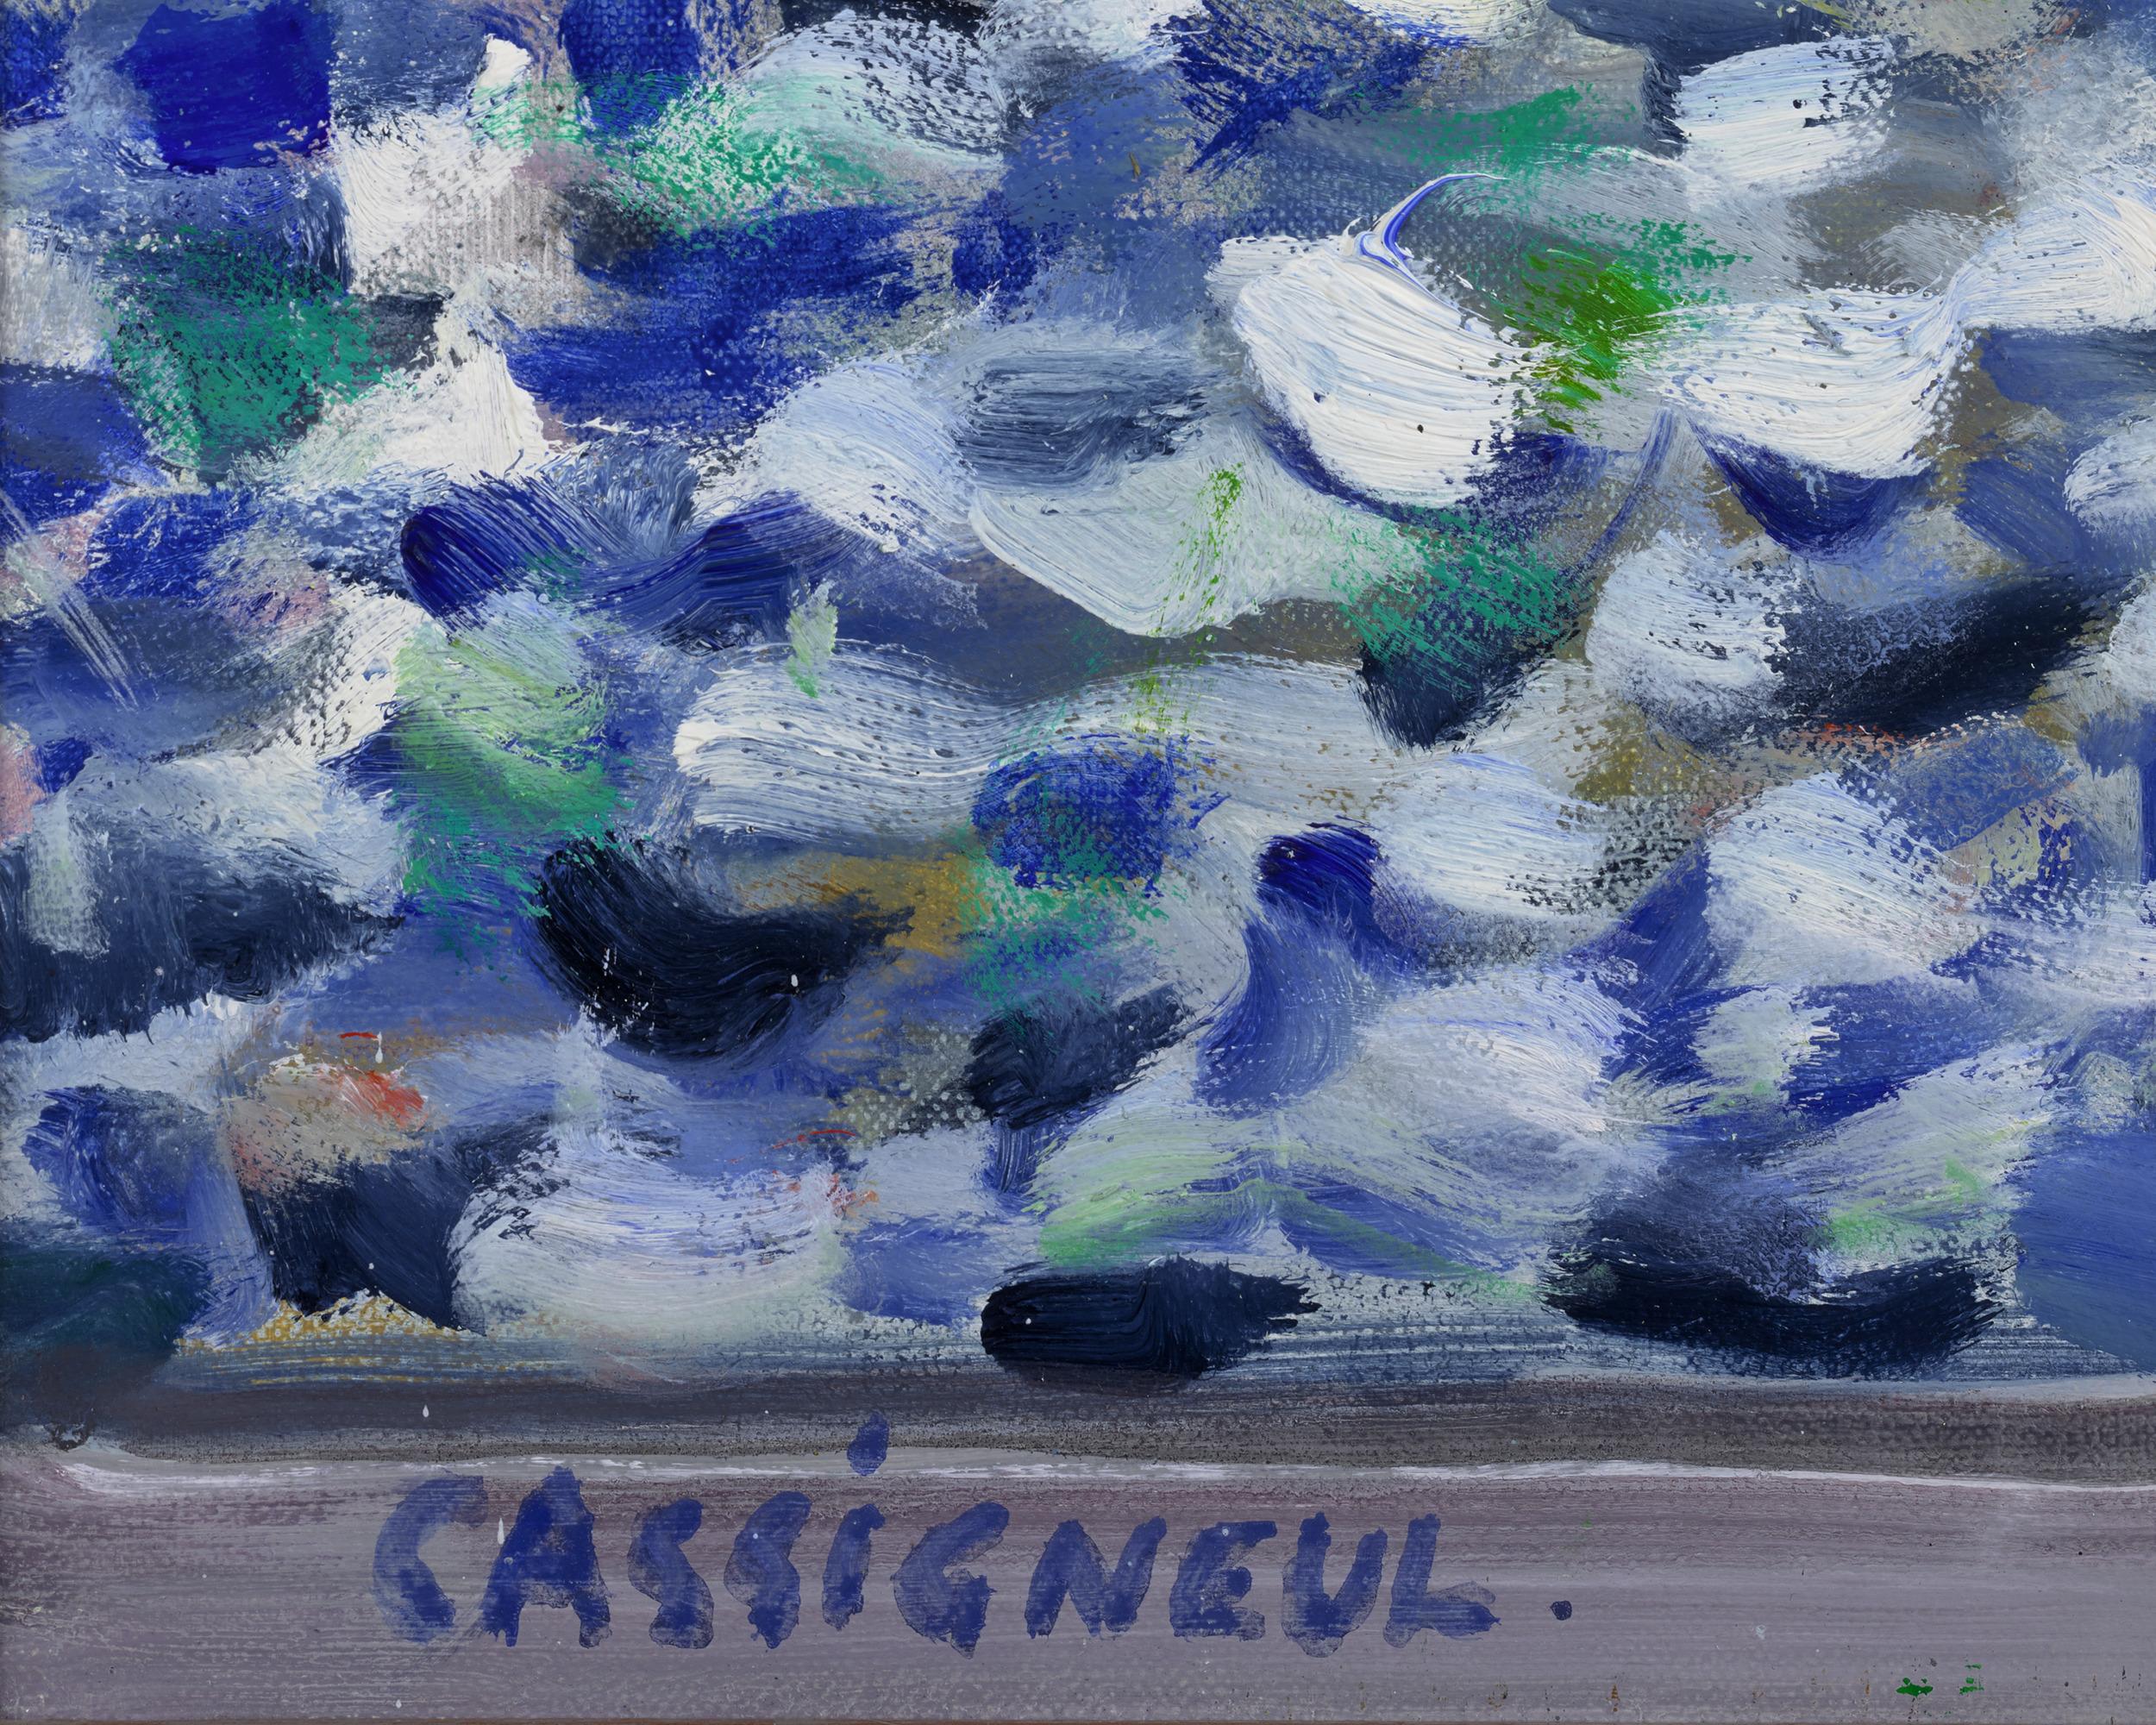 Houlgate by Jean-Pierre Cassigneul 2